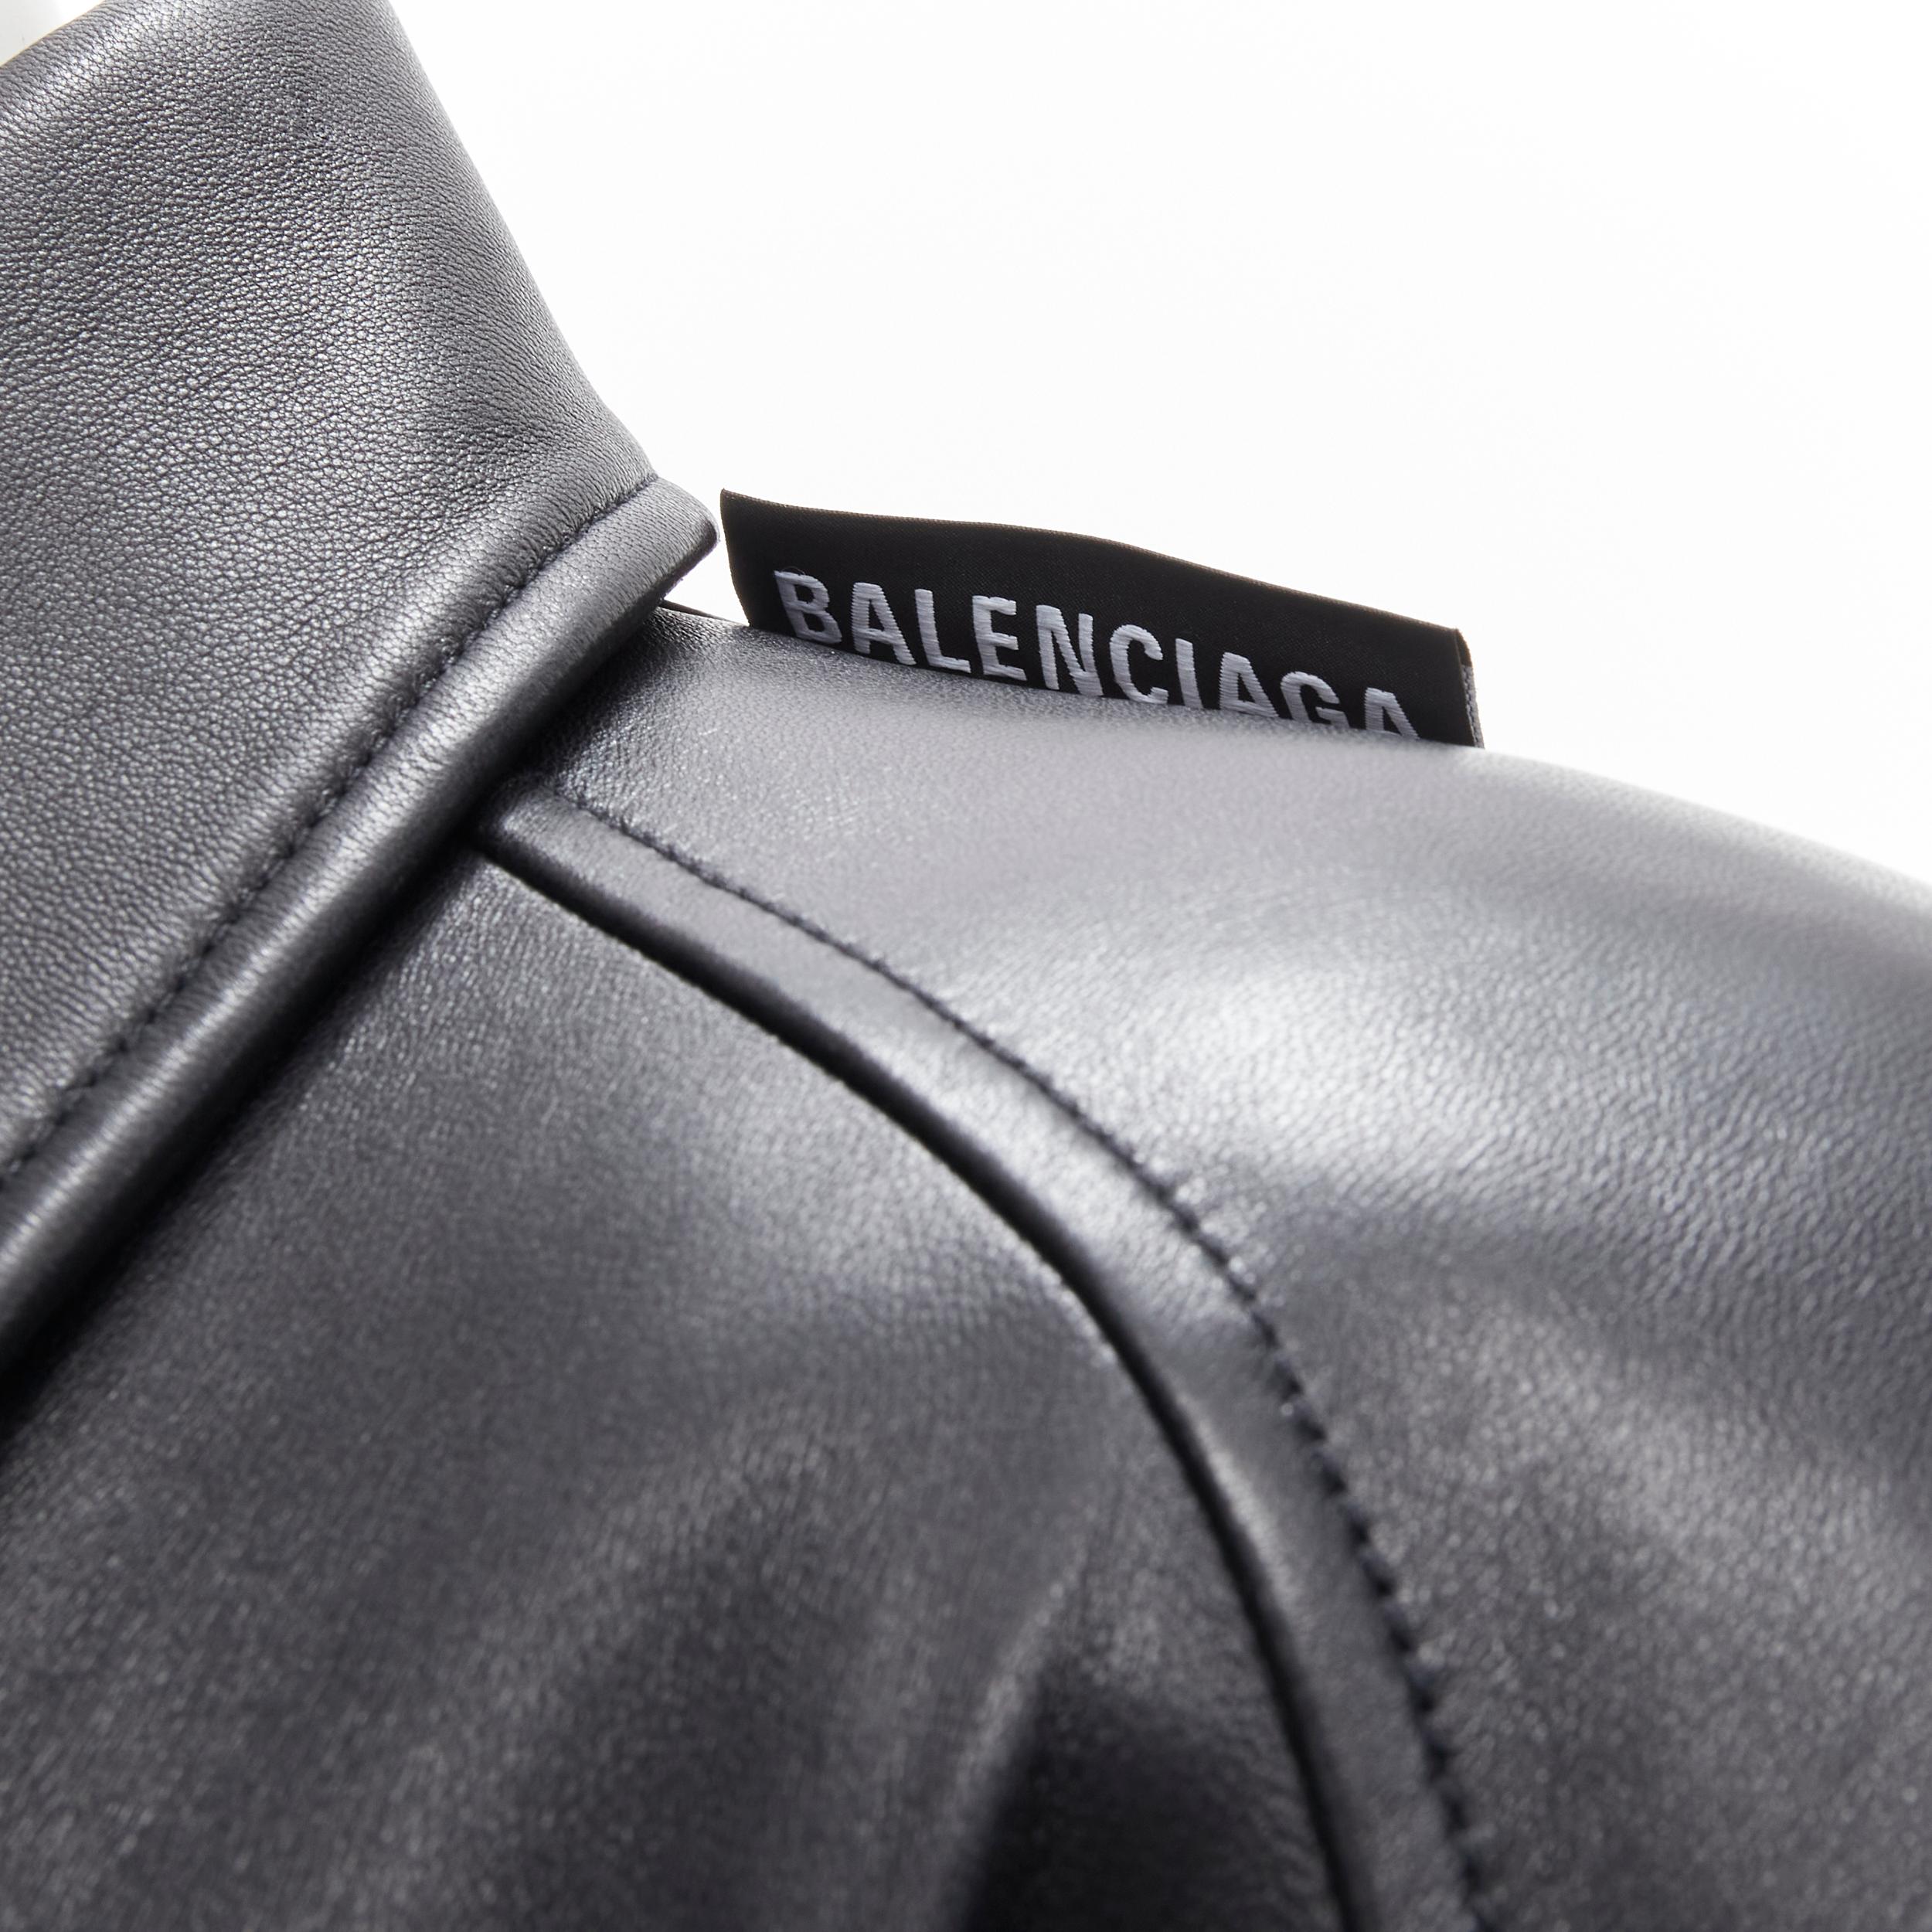 BALENCIAGA 2018 black lambskin logo tag power shoulder belted coat FR34 XS
Brand: Balenciaga
Designer: Demna
Collection: 2019 Runway
Material: Lambskin Leather
Color: Black
Pattern: Solid
Closure: Belt
Extra Detail: Black lambskin leather. Spread